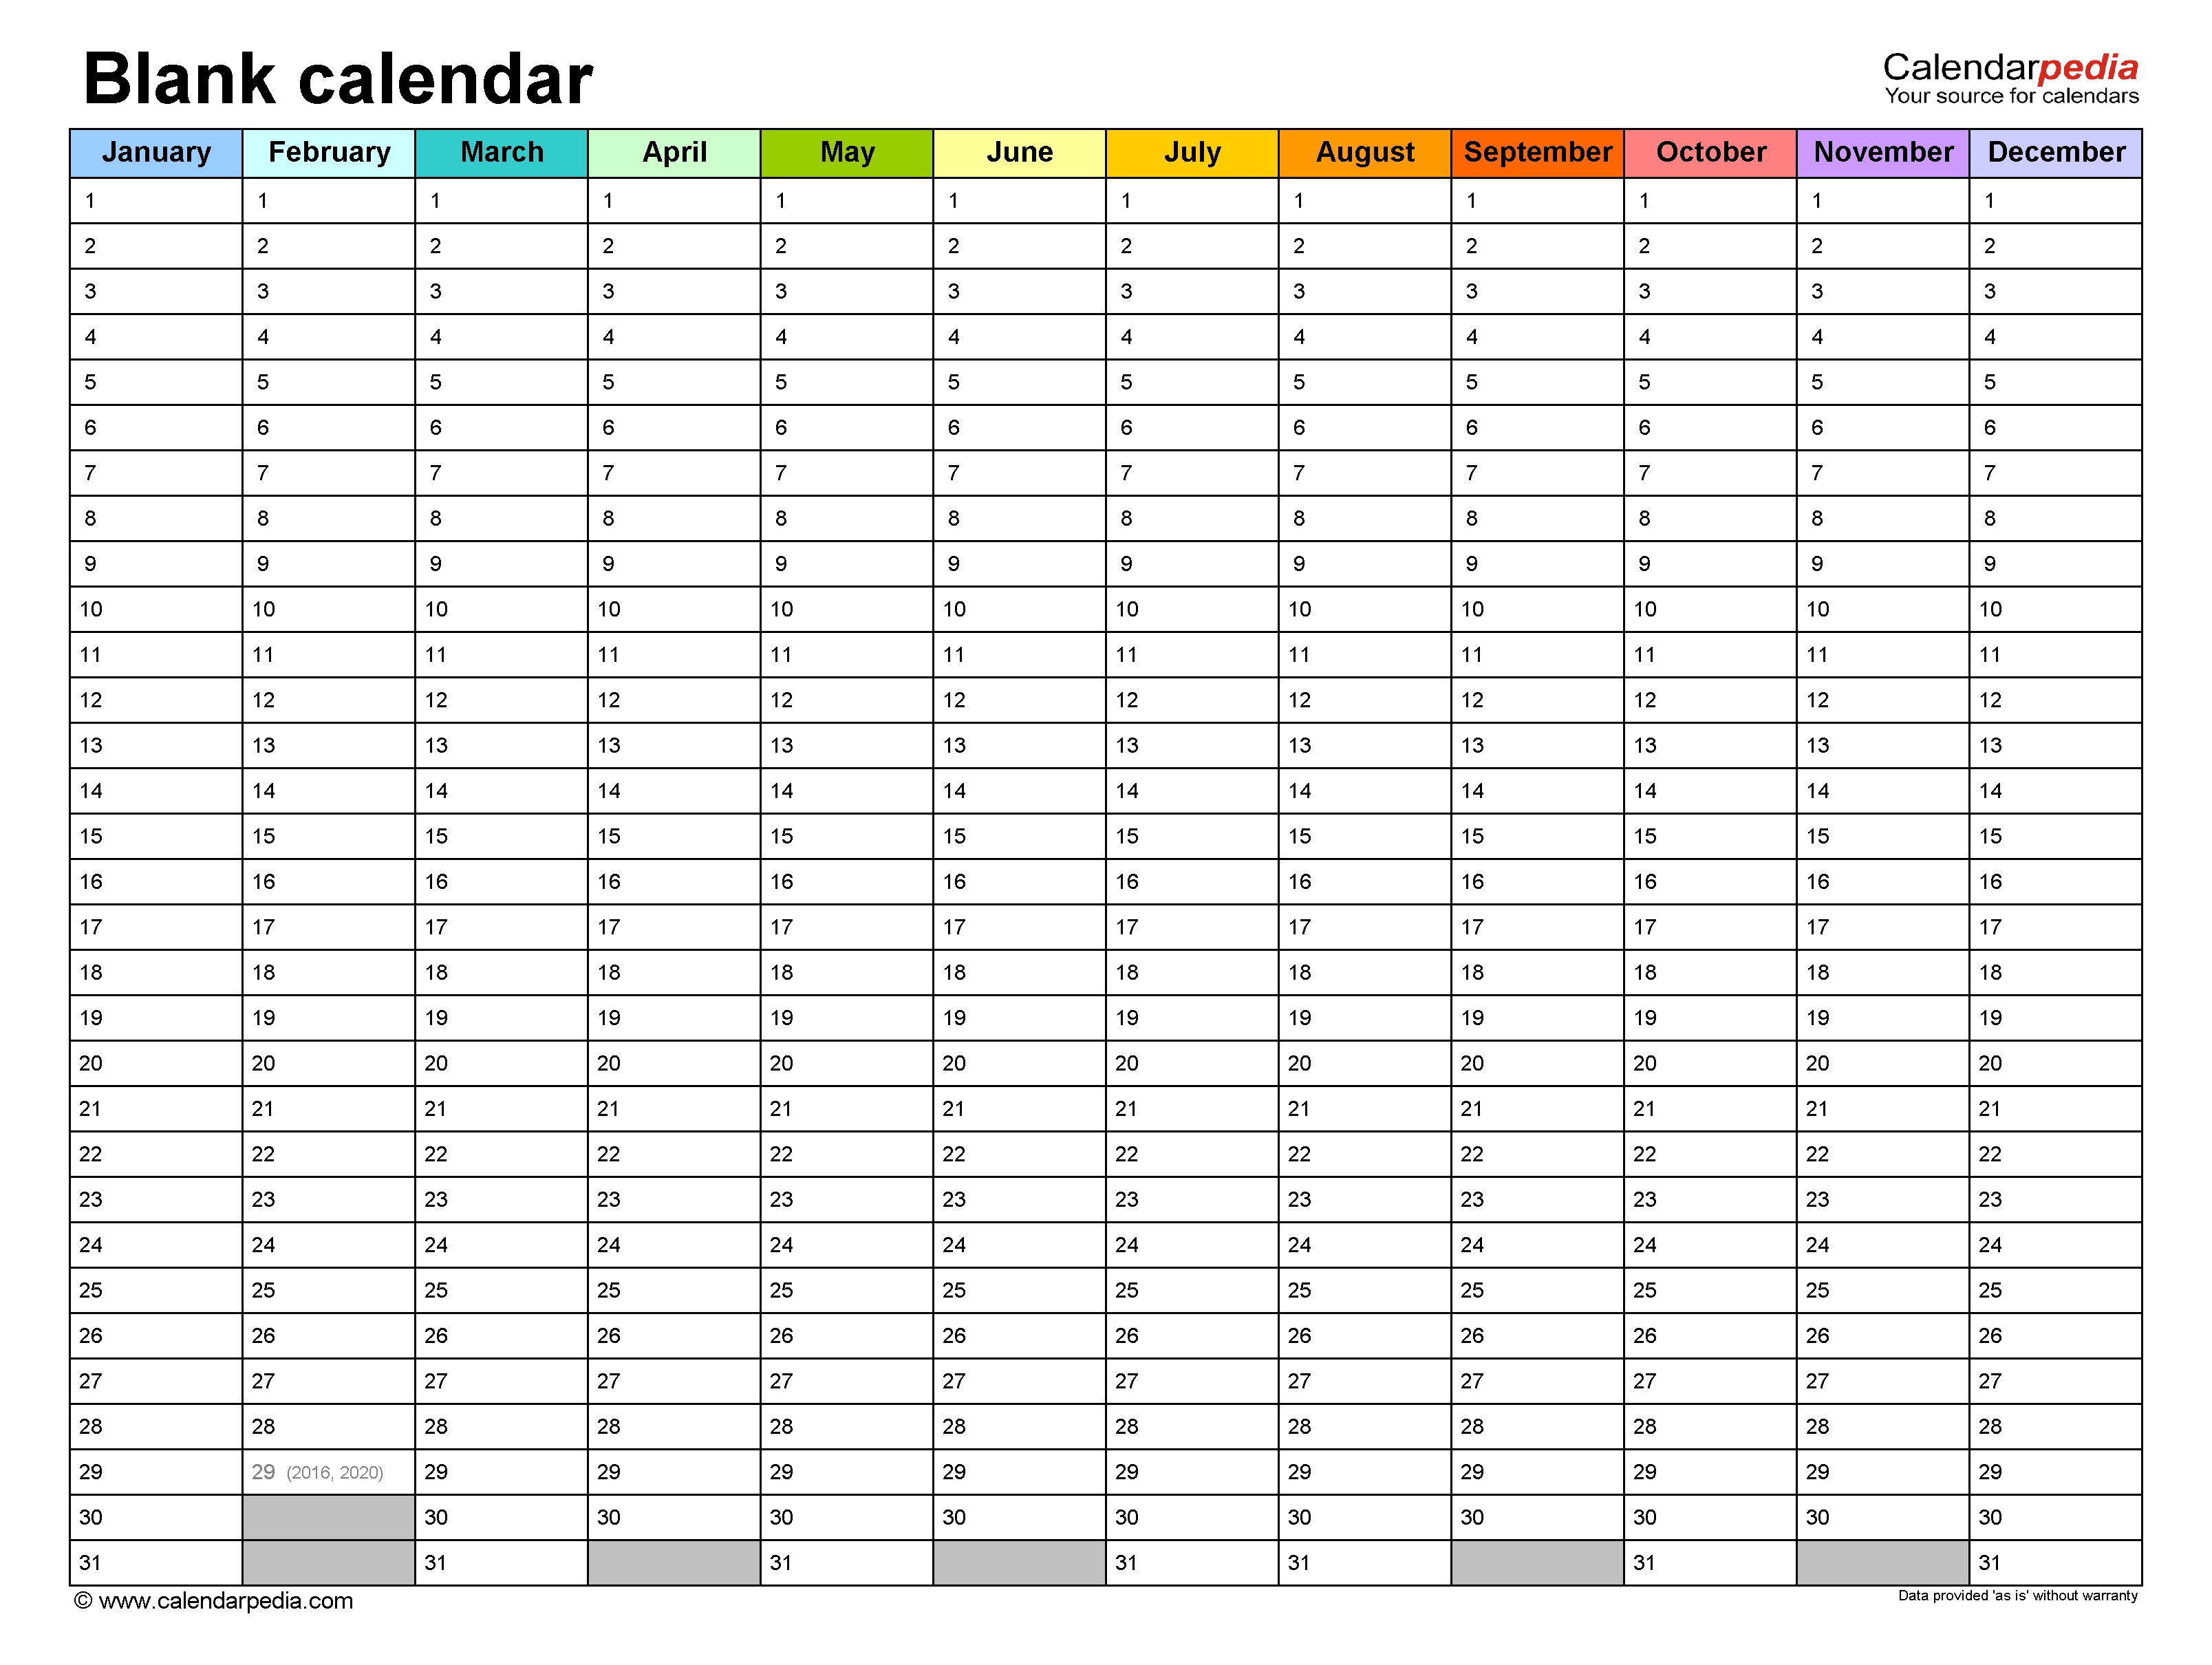 Blank Calendars - Free Printable Microsoft Excel Templates Year Calendar Schedule Template